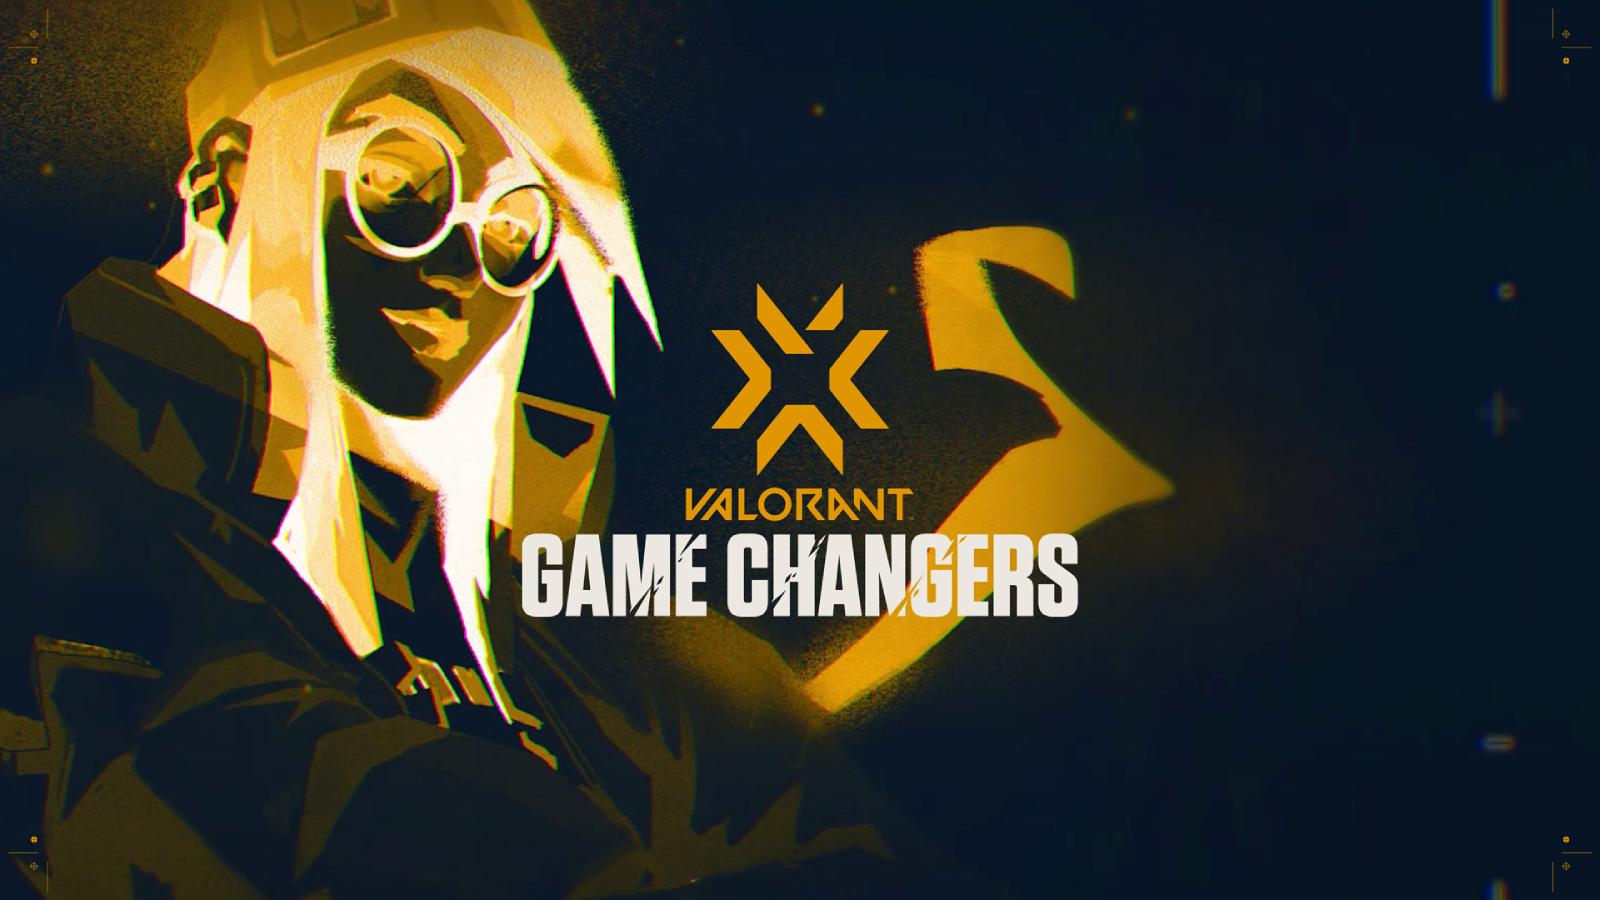 Valorant Game Changers promo art